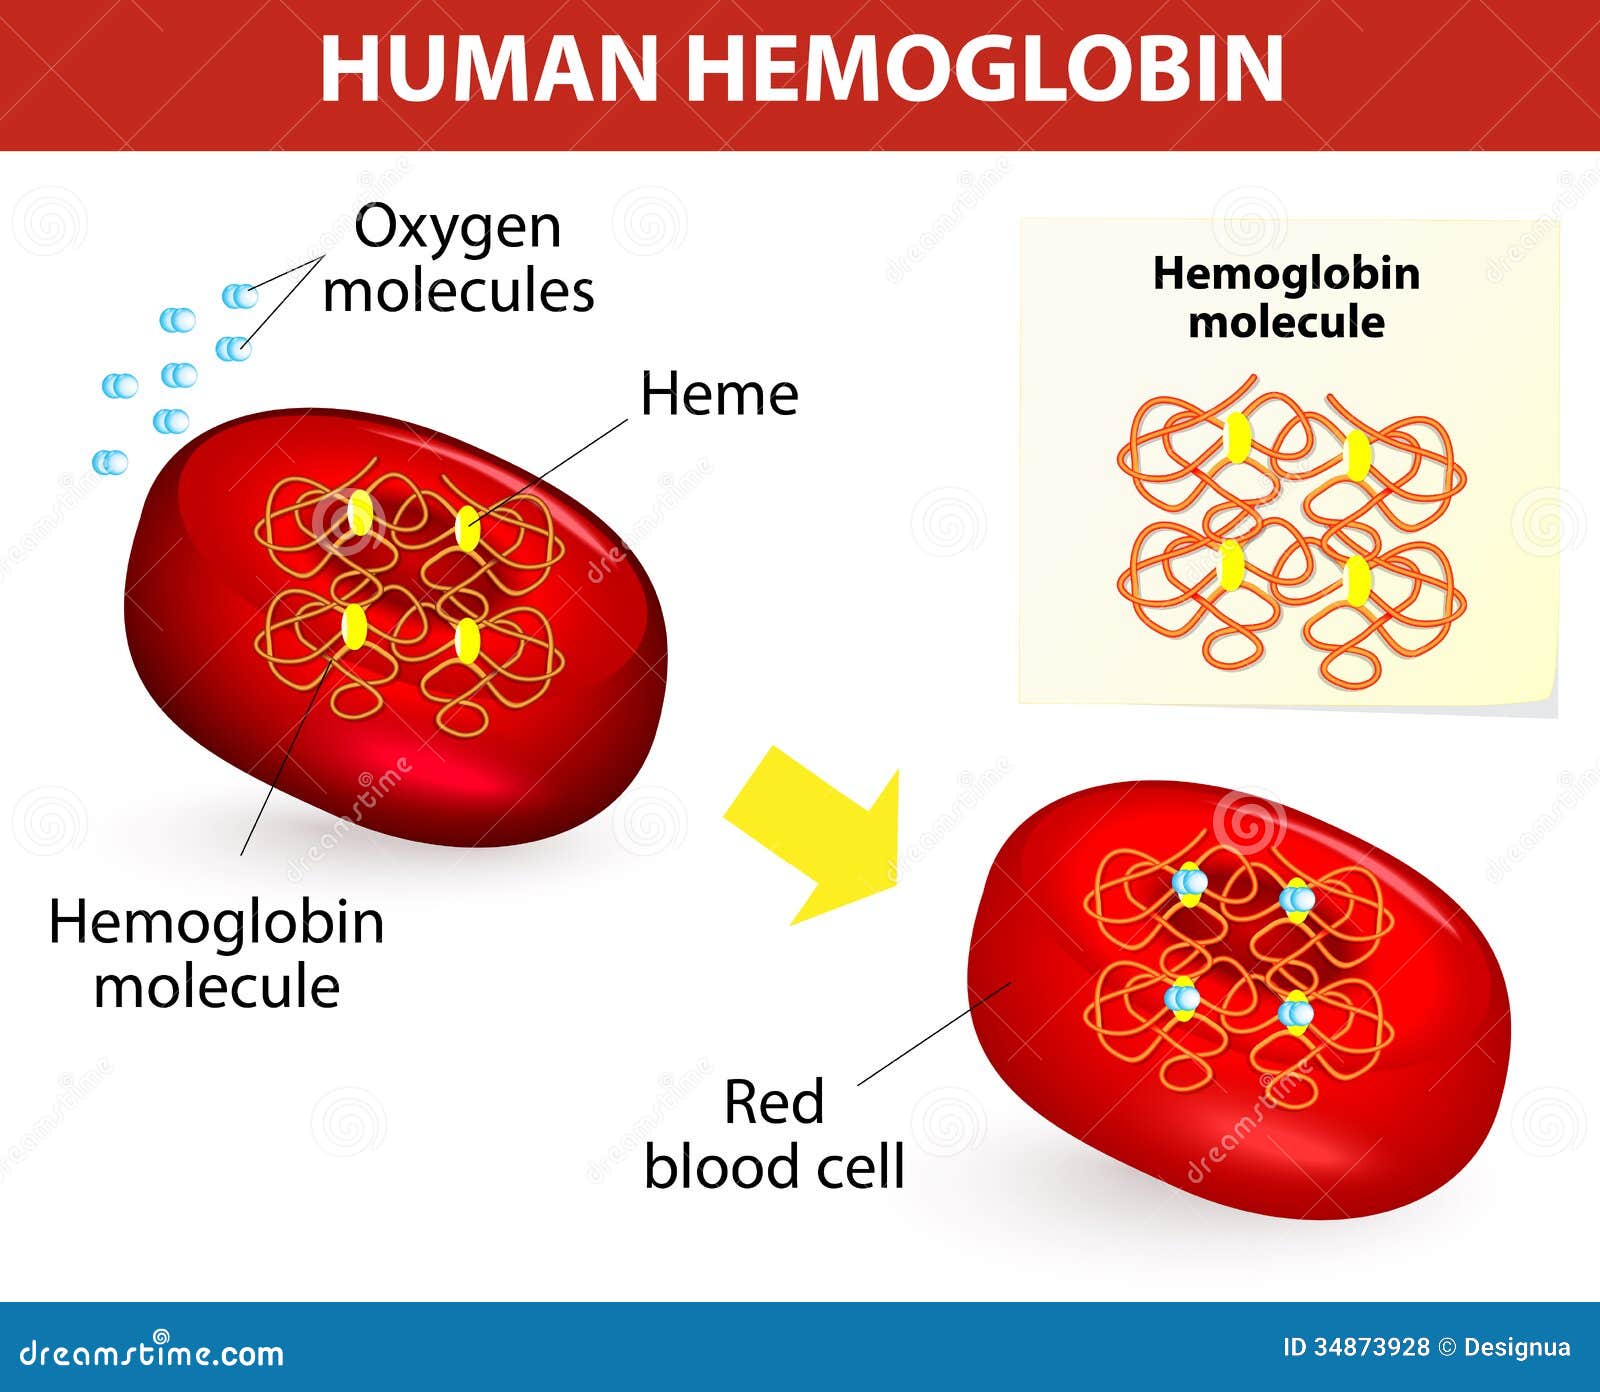 structure of human hemoglobin